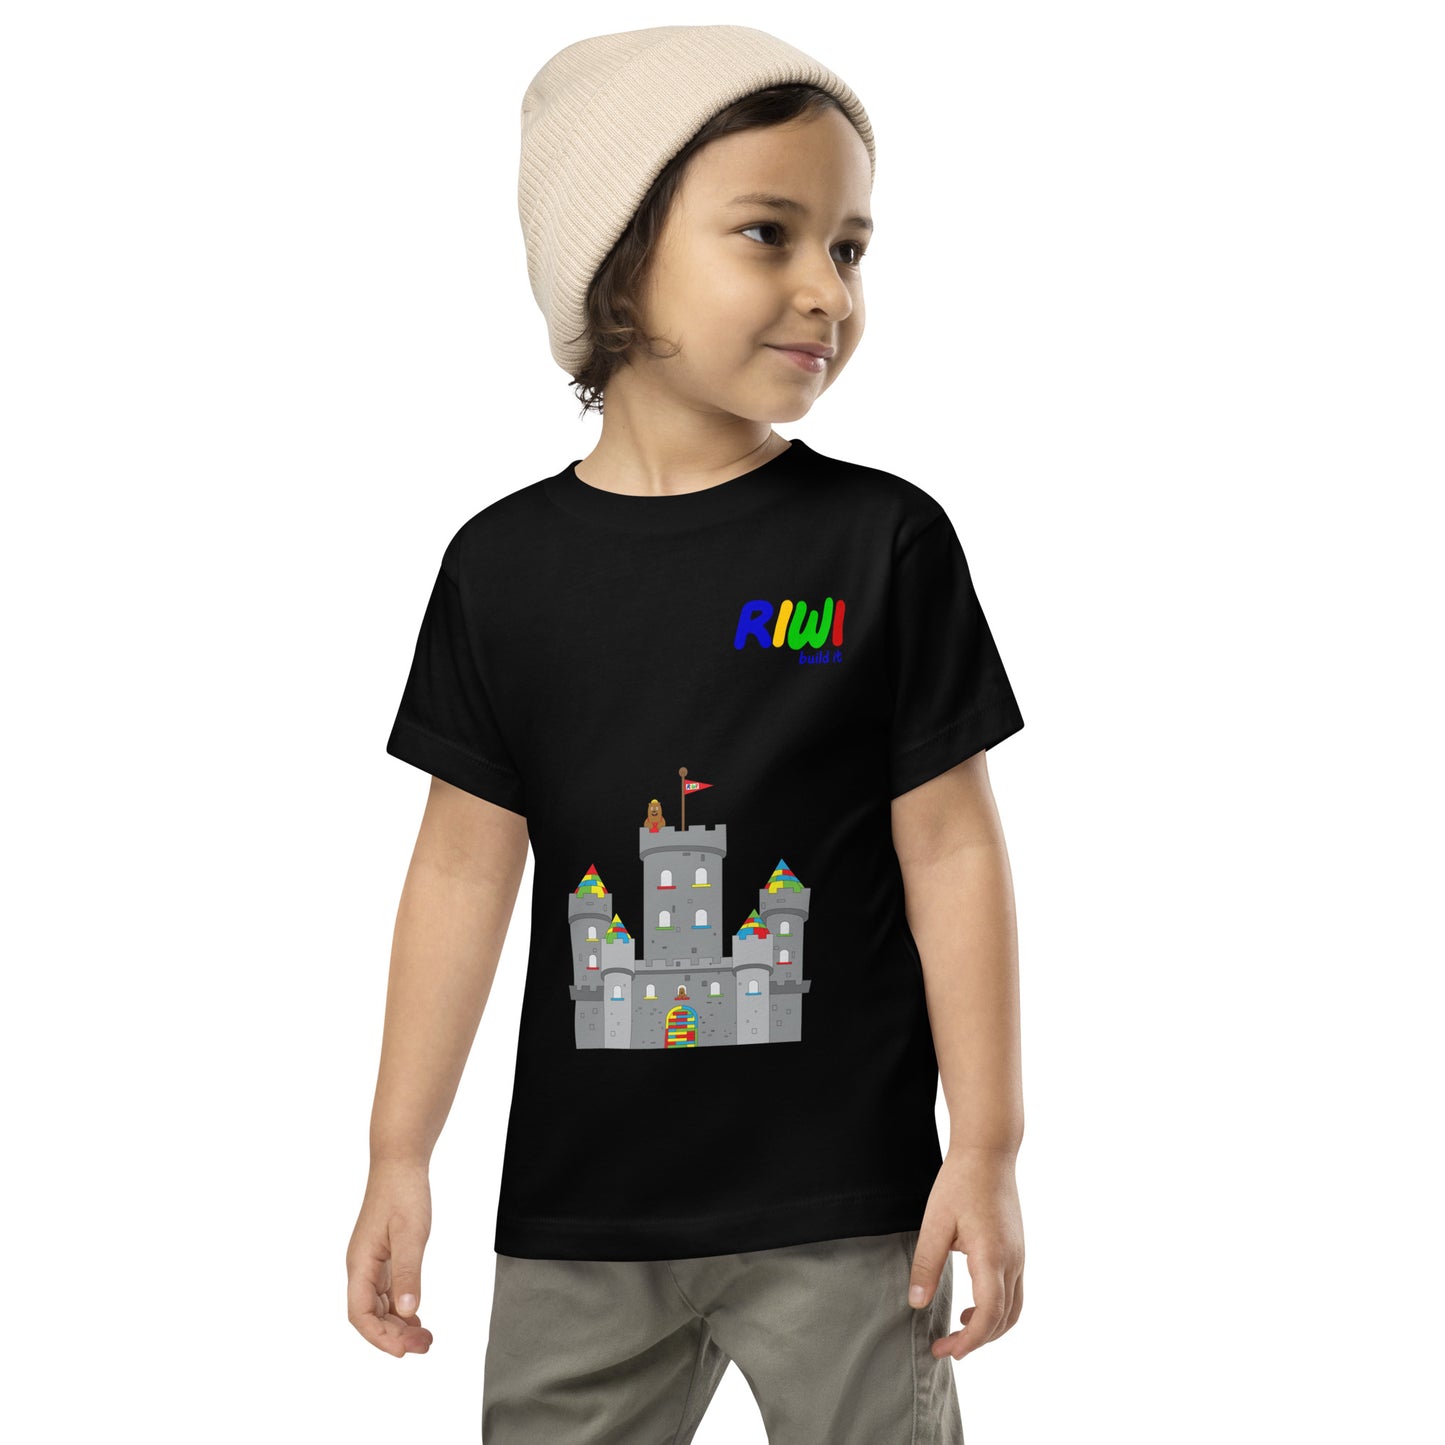 Short-sleeved RIWI® Castle T-shirt